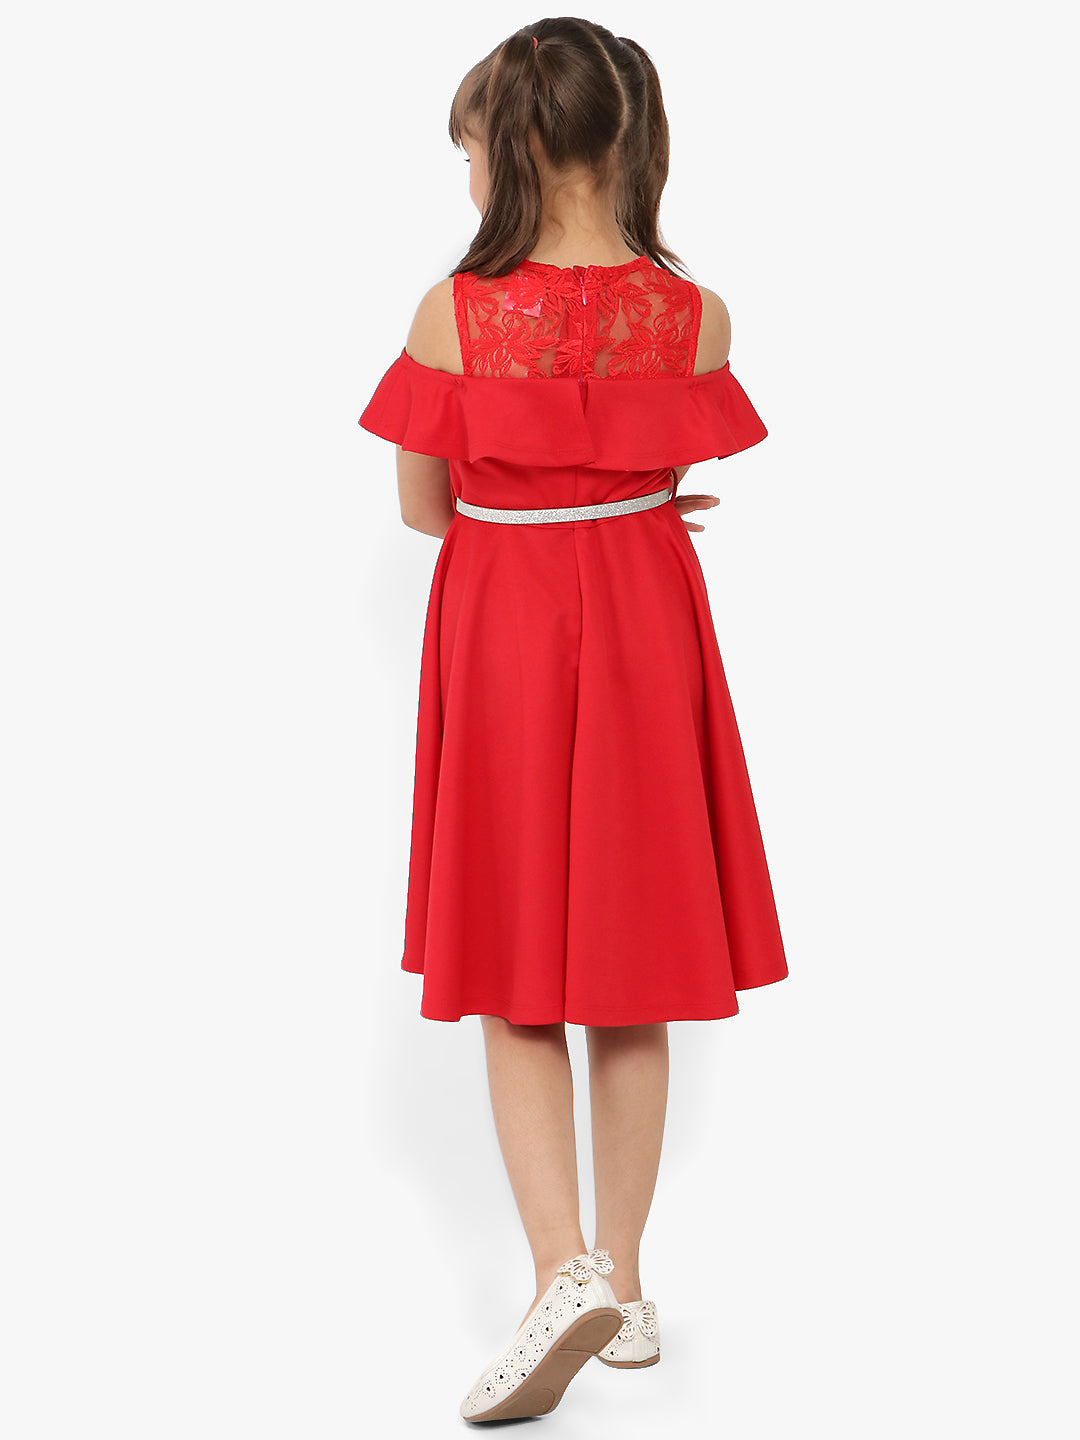 Nautinati Girls Red Solid Short Sleeve Polyester Dress